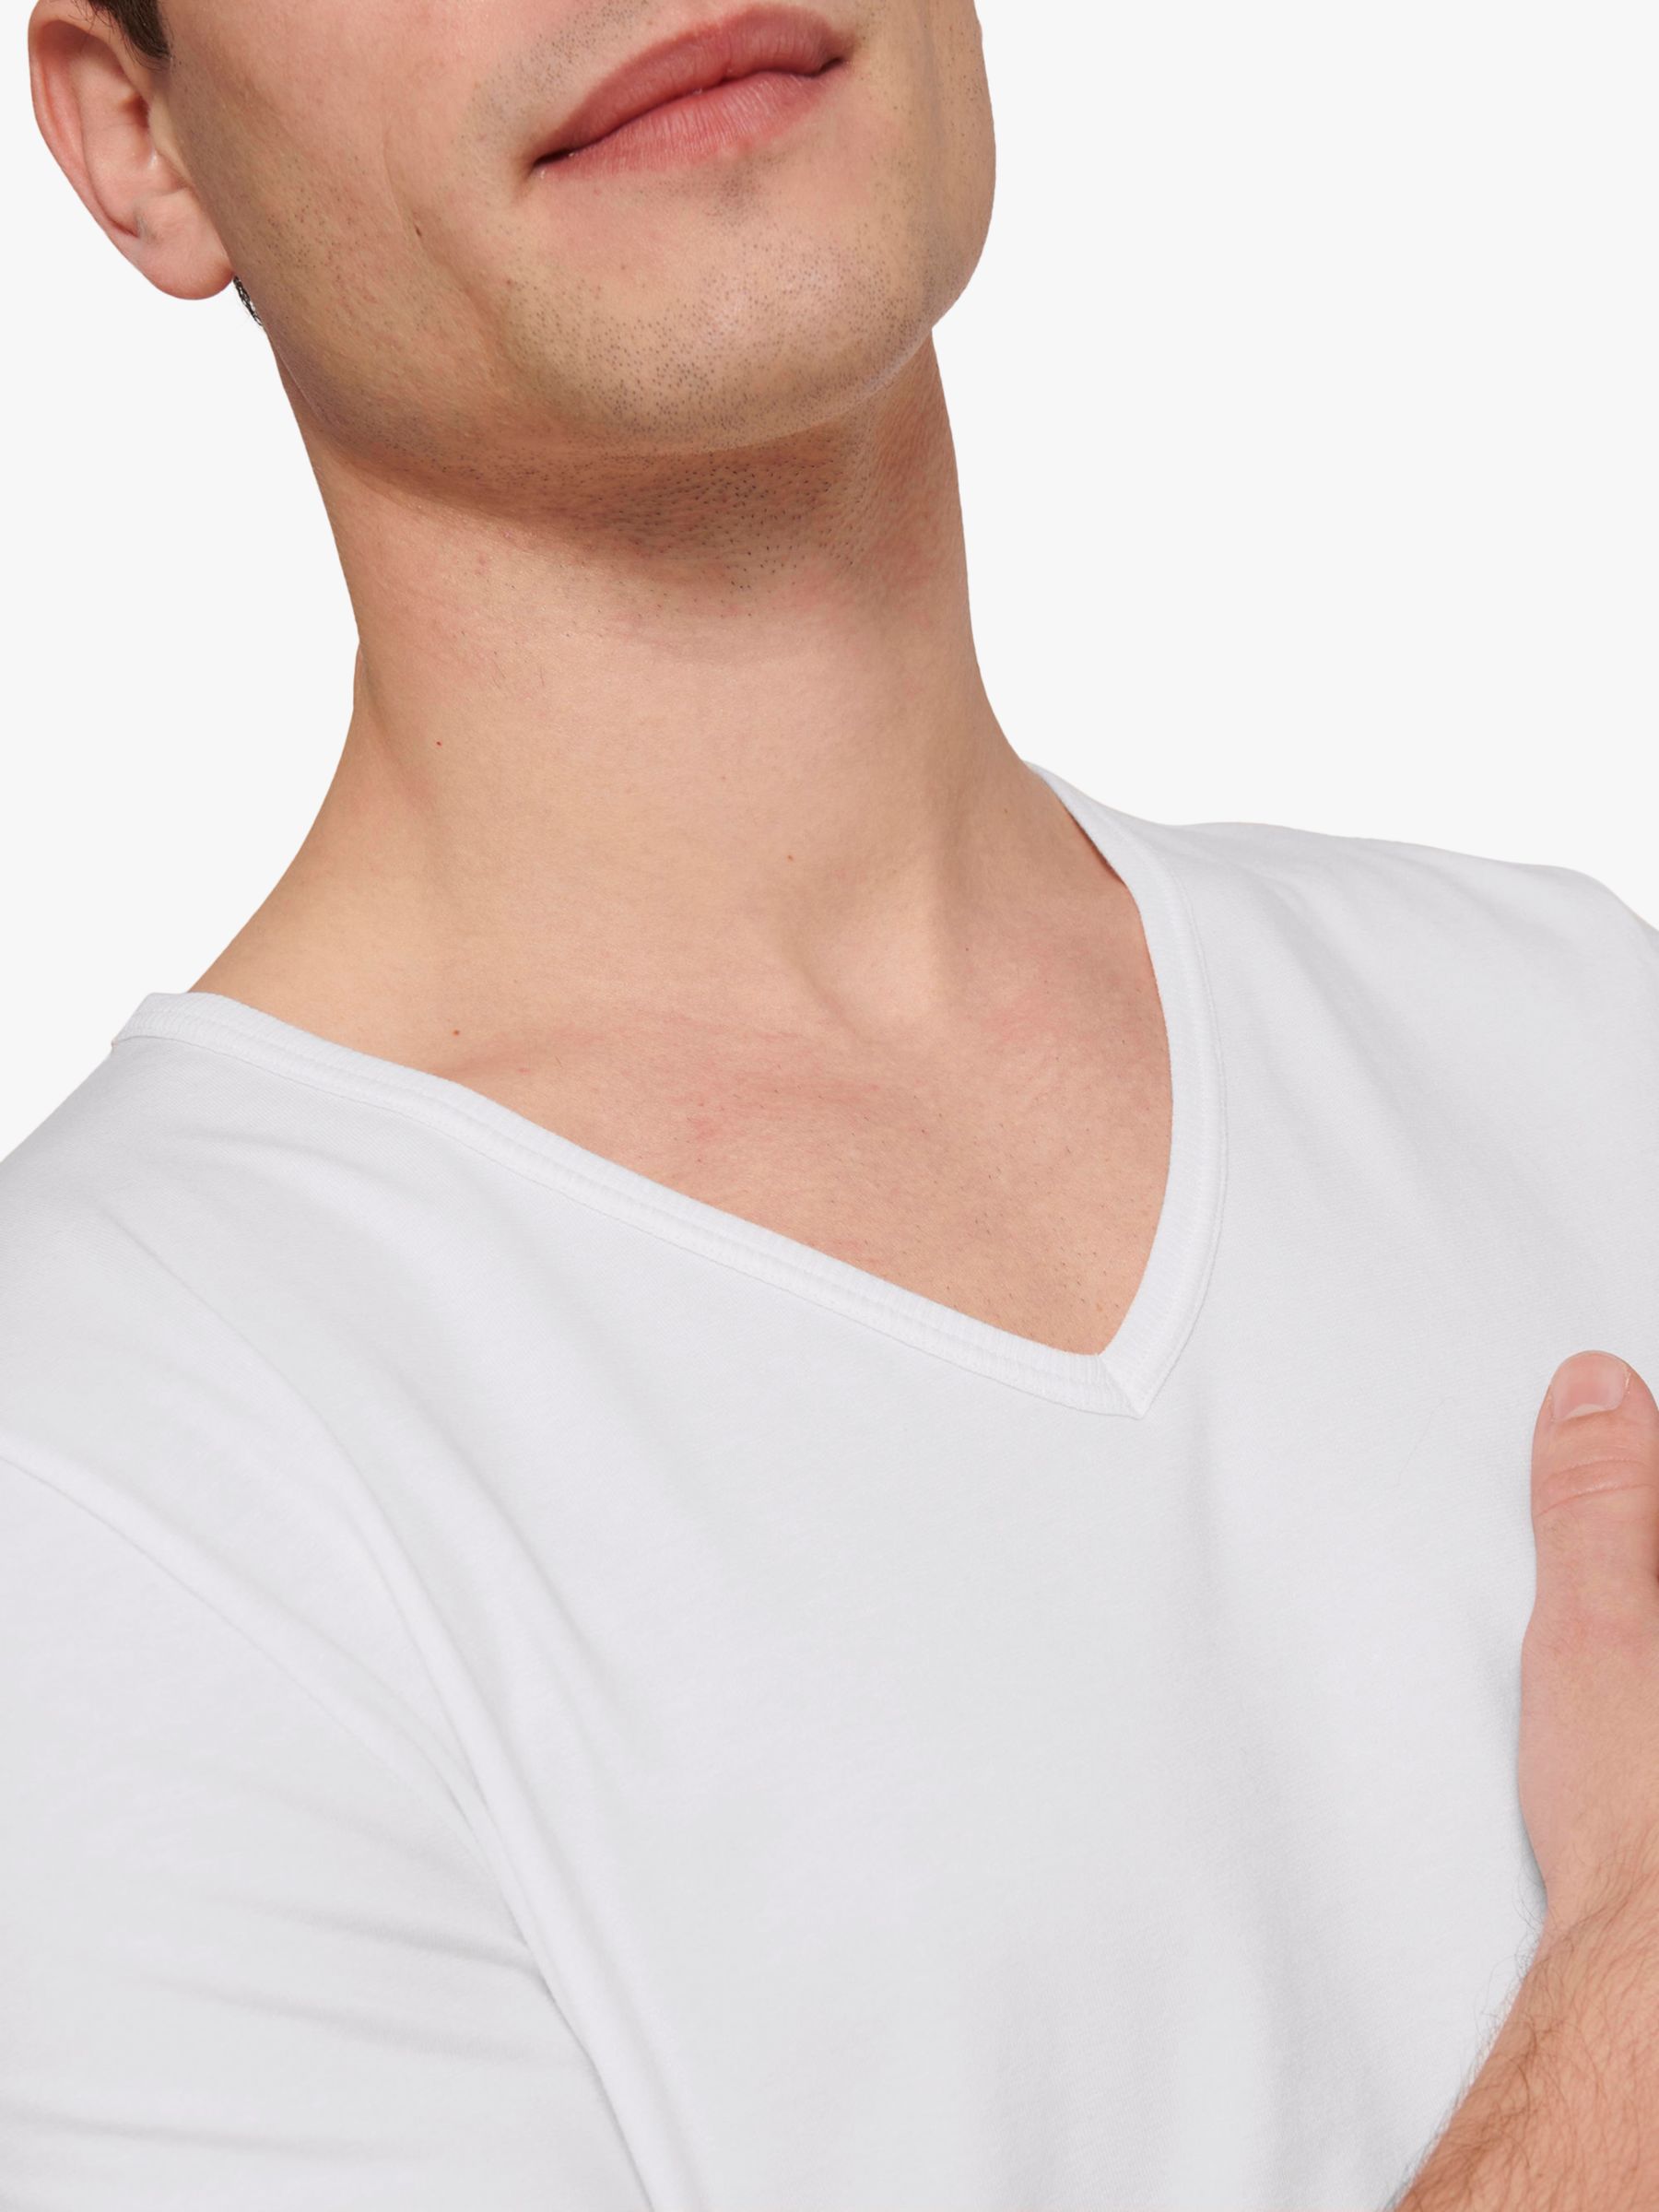 sloggi GO V-Neck Jersey Short Sleeve Lounge T-Shirt, White, L